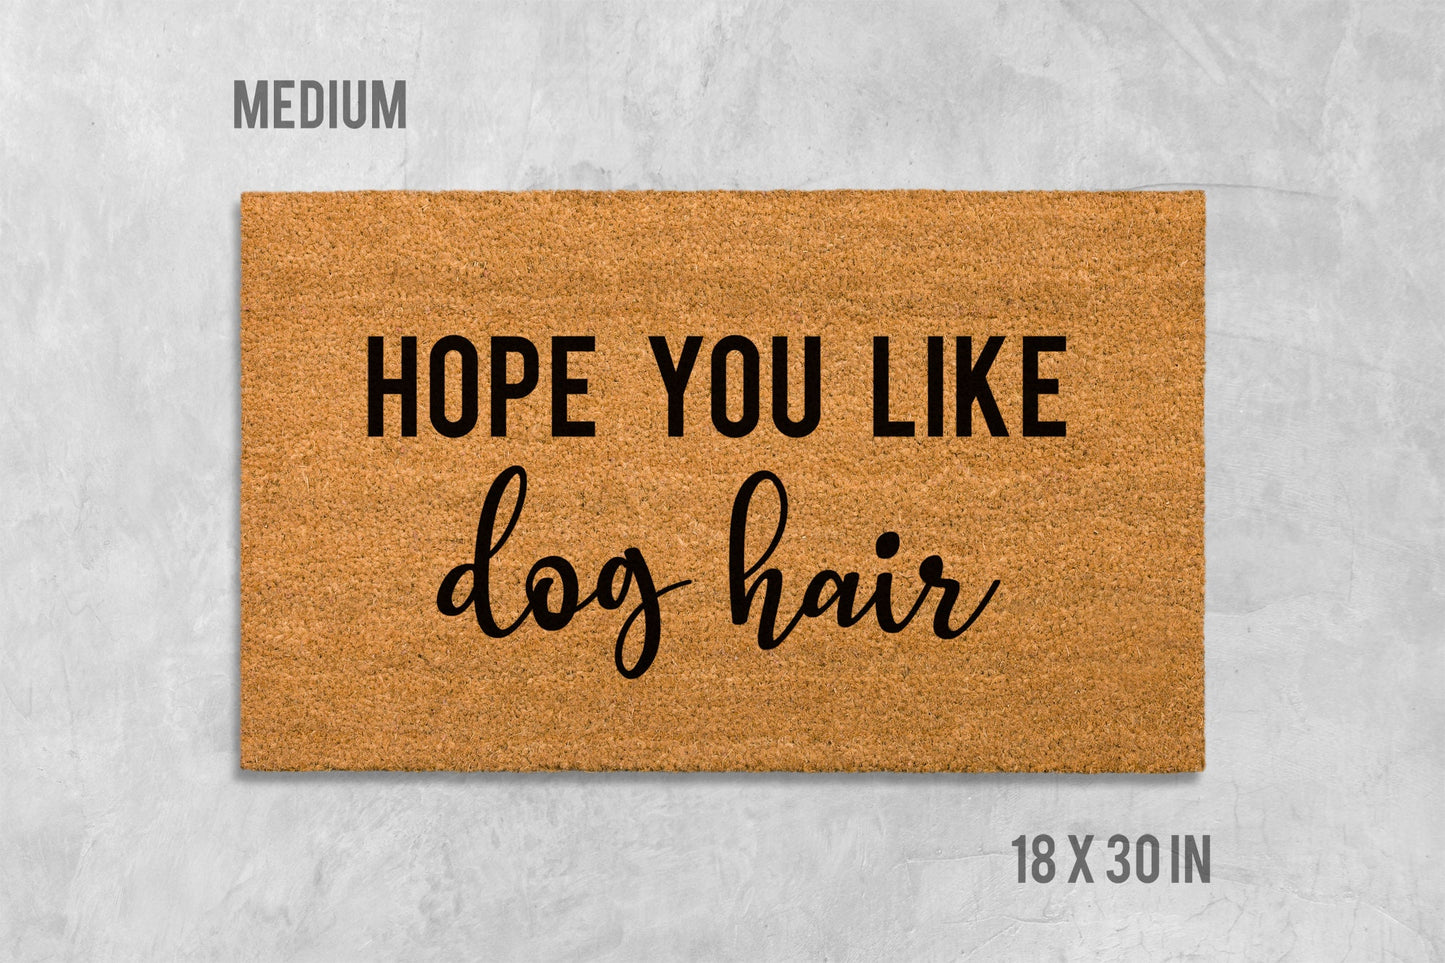 Hope You Like Dog Hair